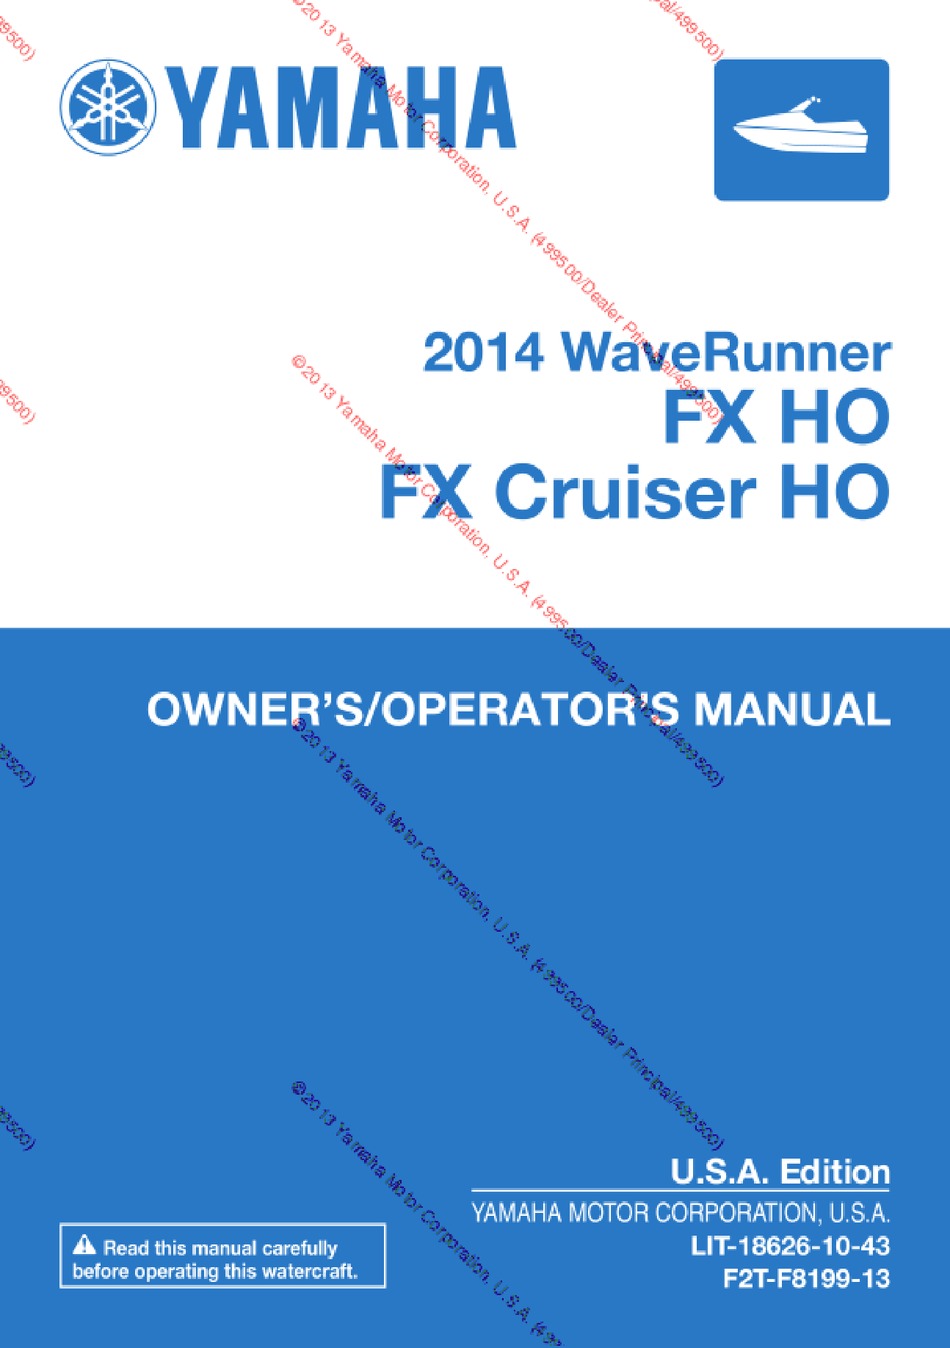 YAMAHA FX HO OWNER'S/OPERATOR'S MANUAL Pdf Download | ManualsLib